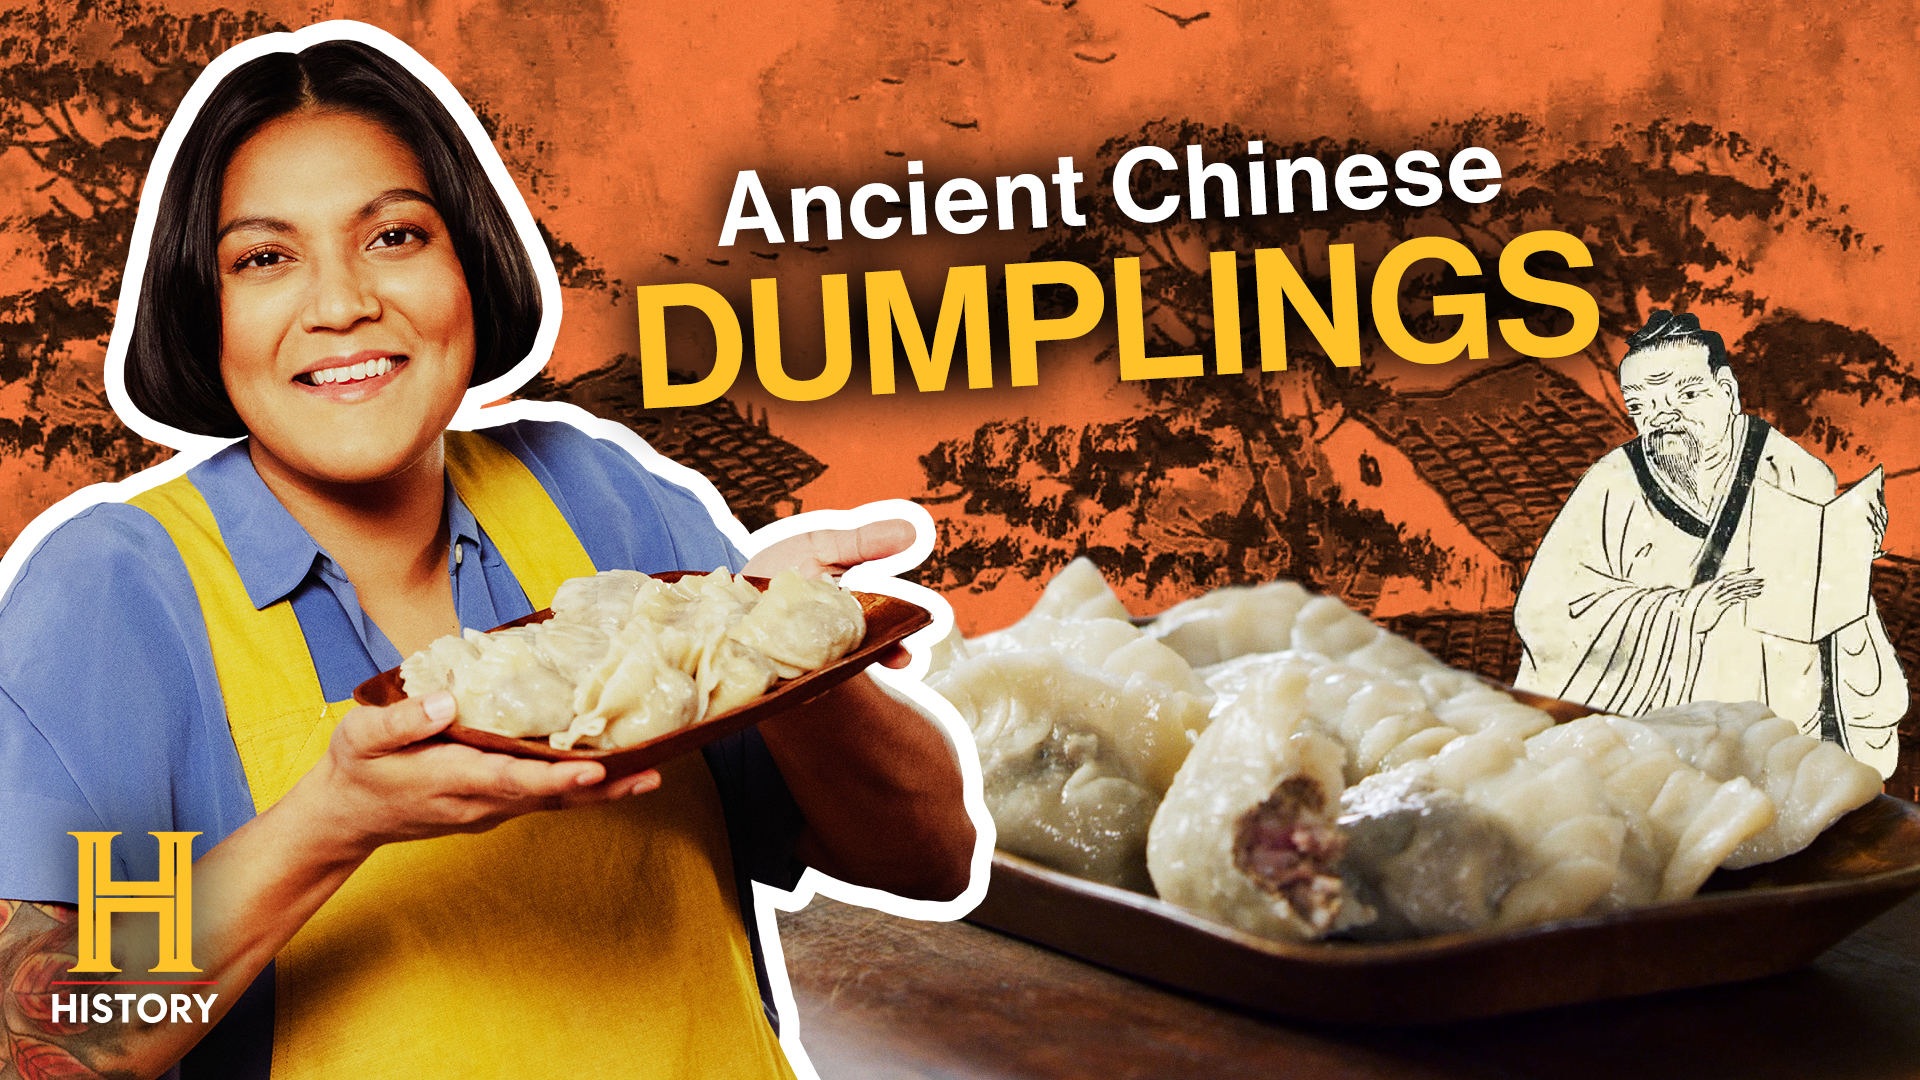 The Original Chinese Dumpling Had a Unique Purpose